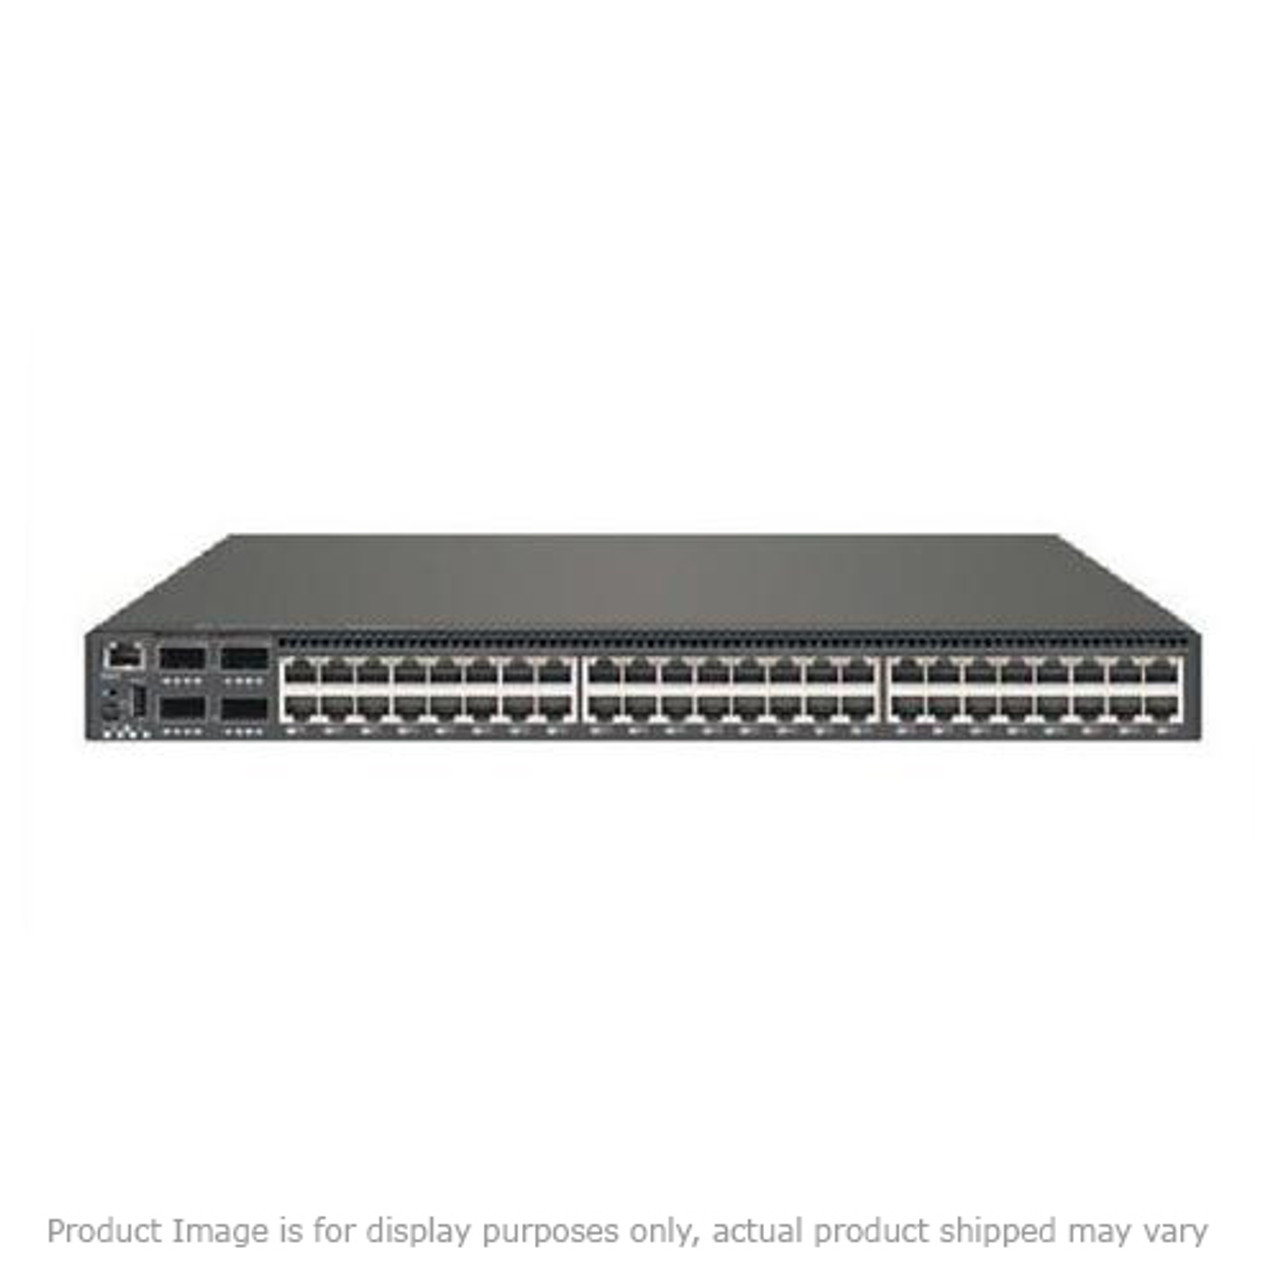 ES510TR Intel 24 Port Ethernet Switch (Refurbished)